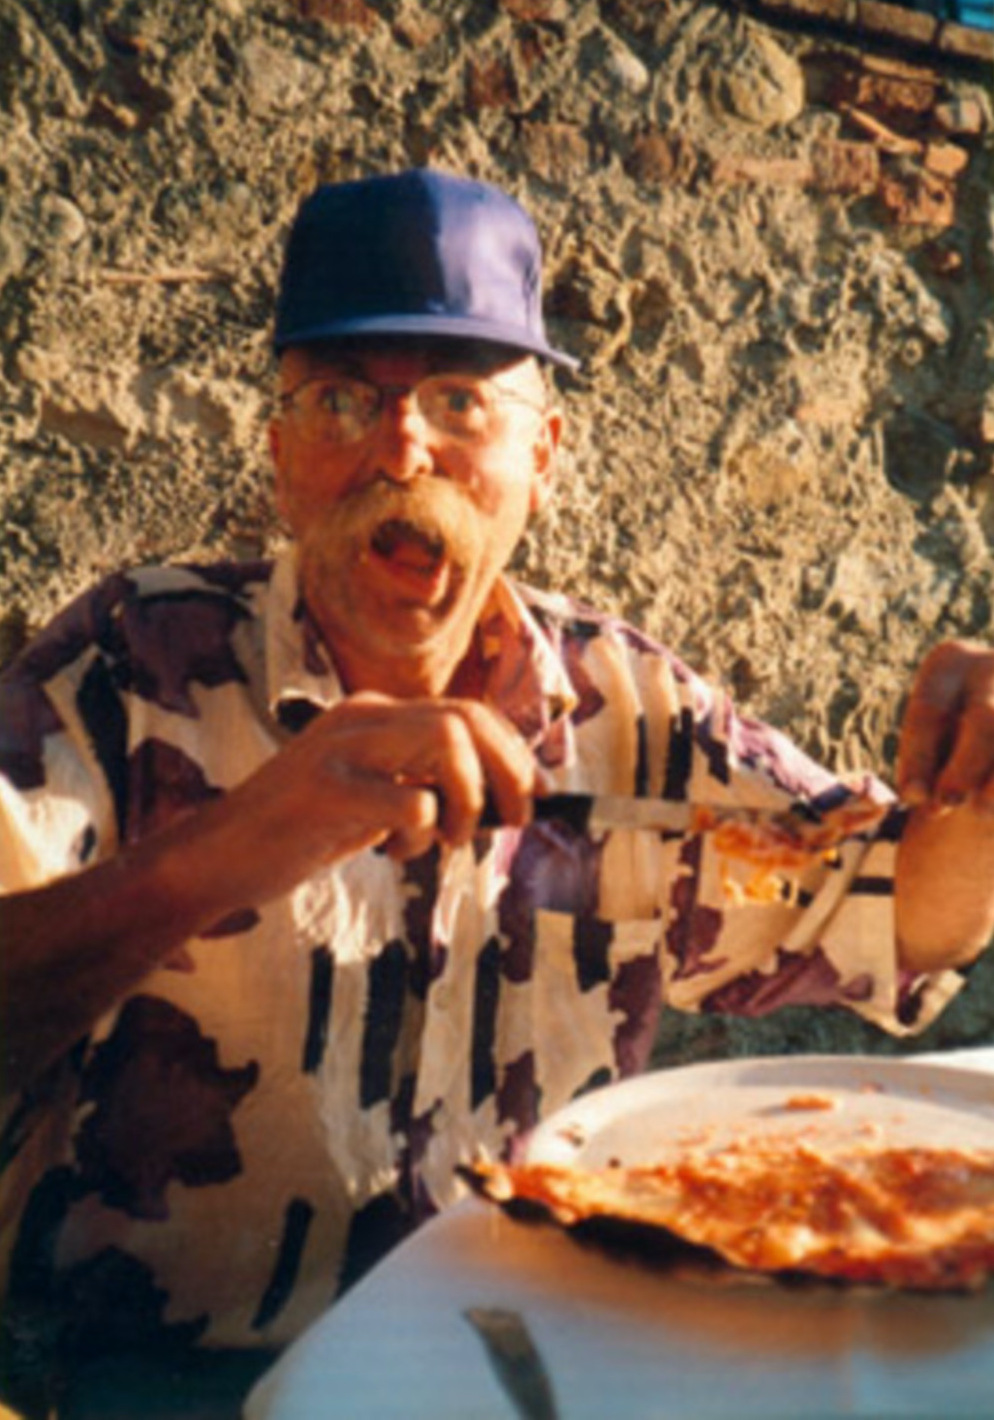 1996-Peter-beim-Pizzaessen.jpg